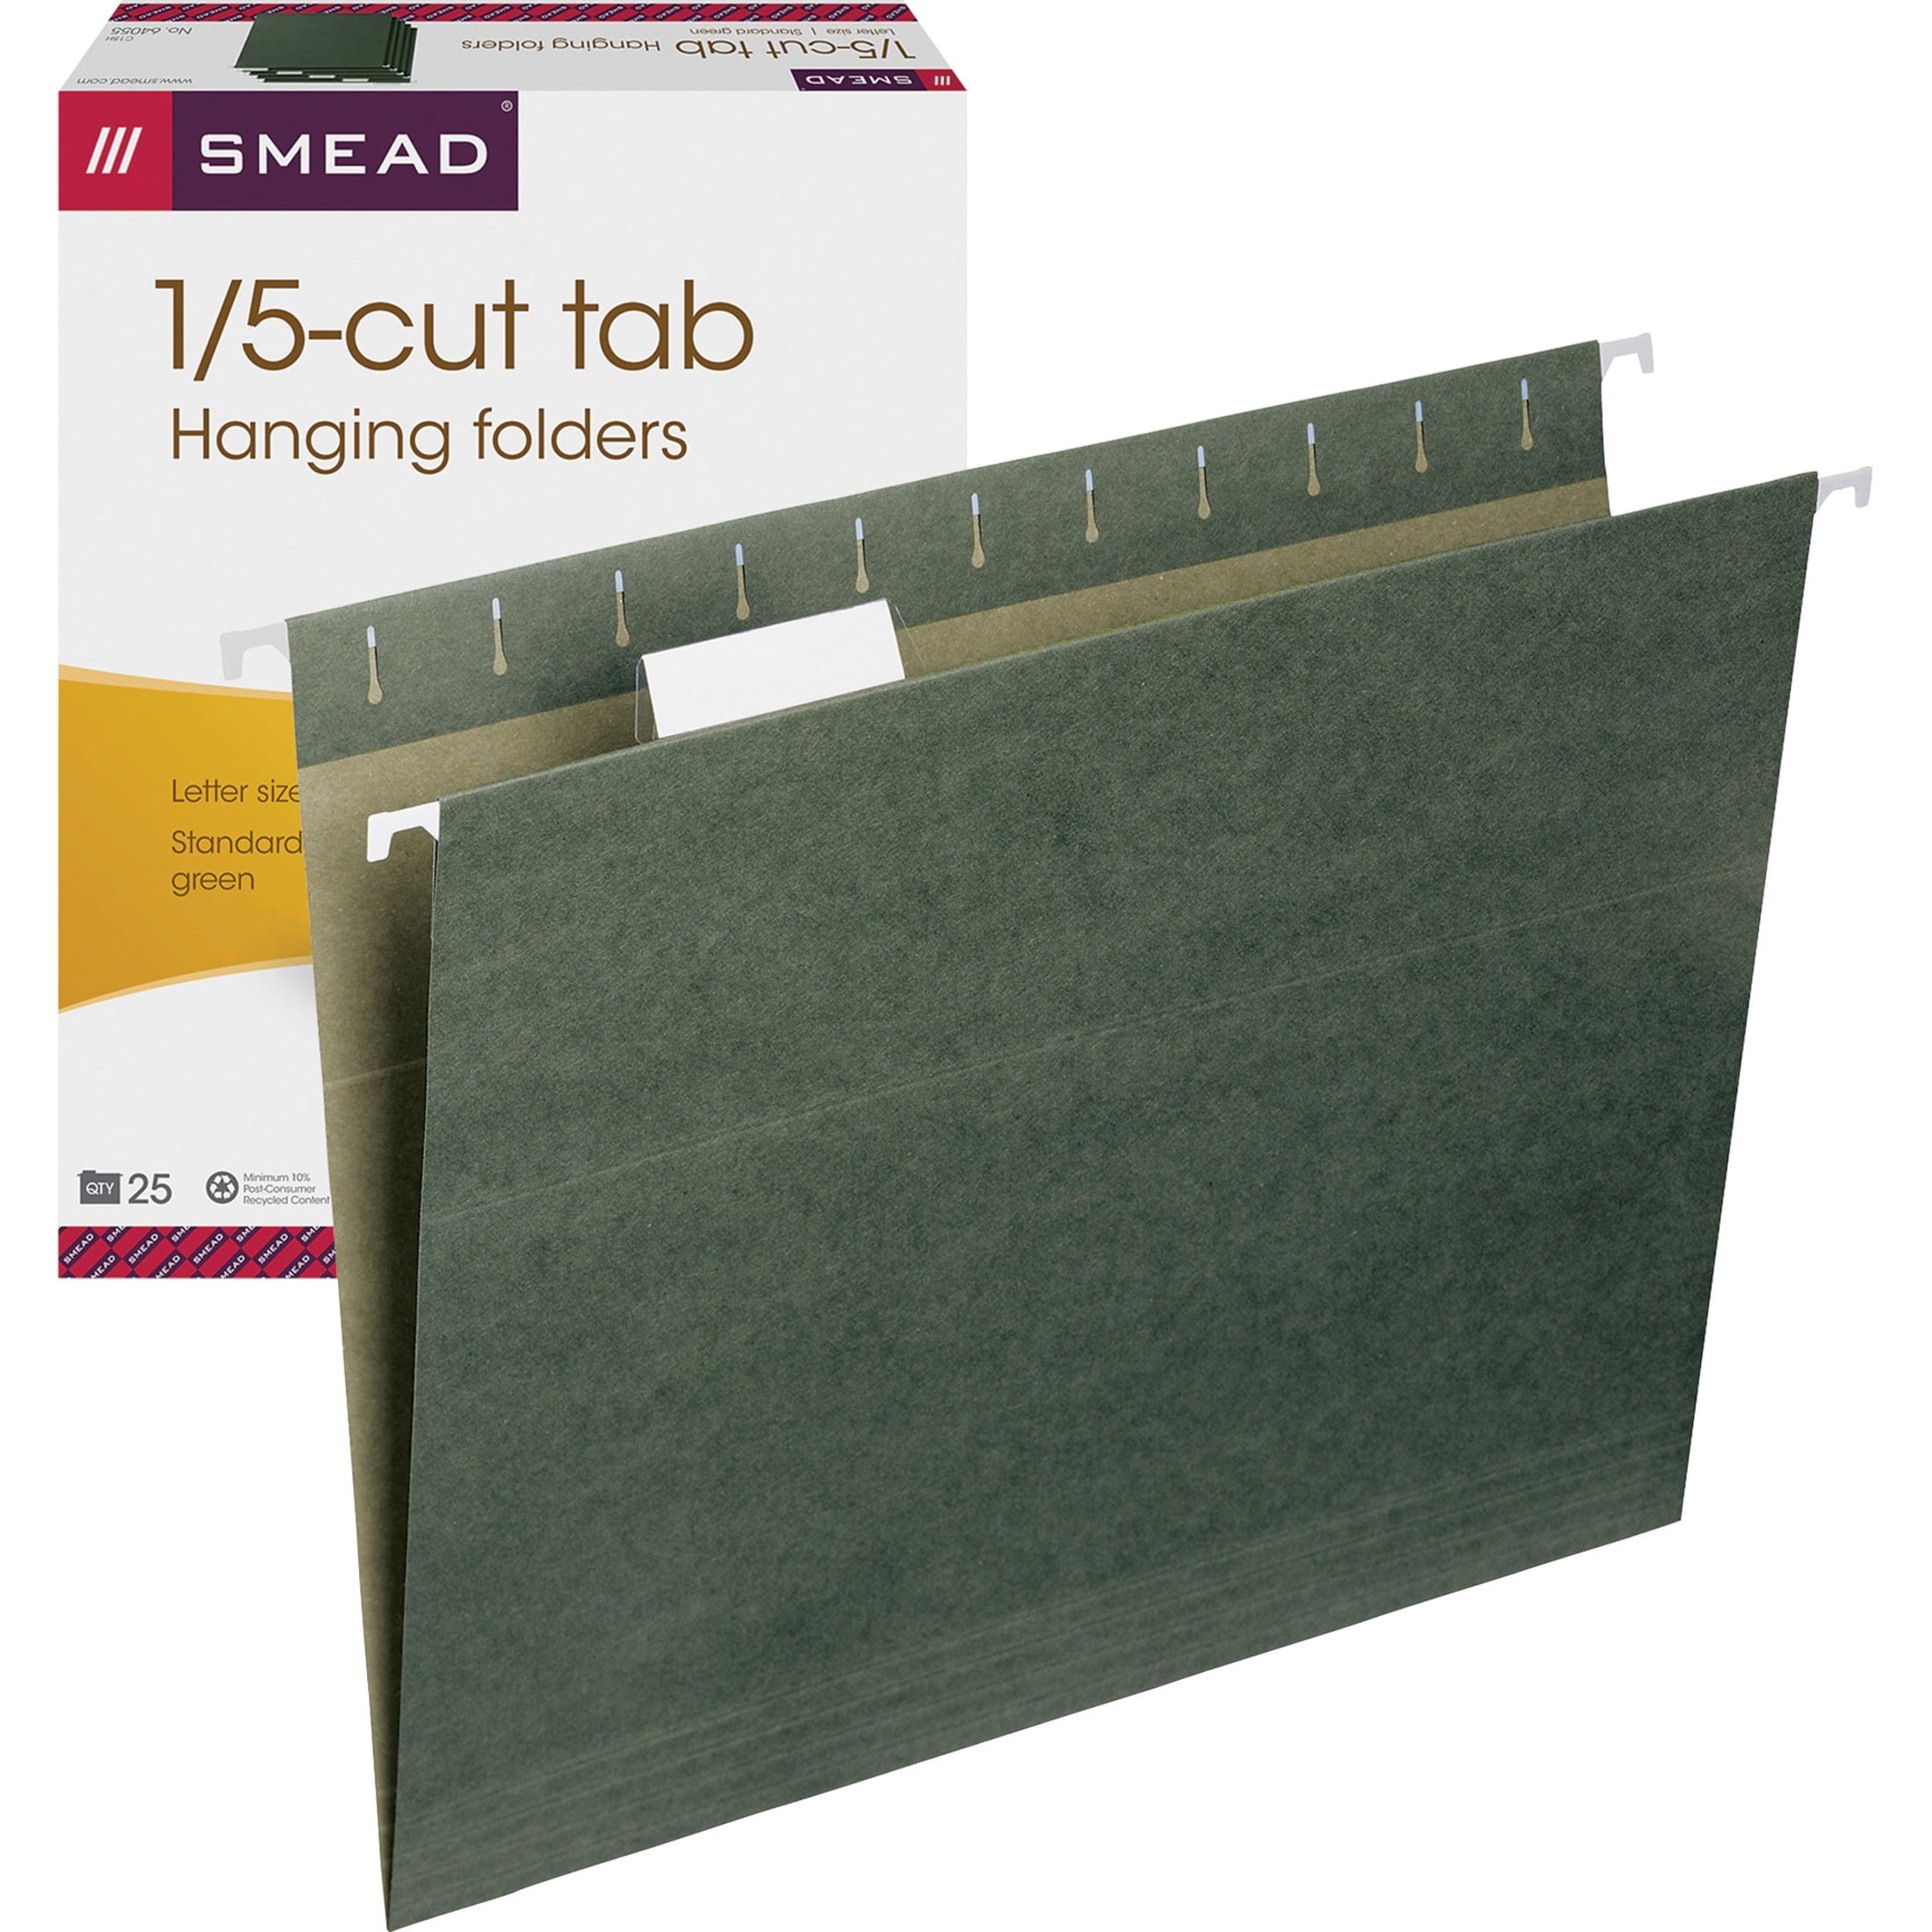 Hanging File Folders Letter Size Standard Green 1/5cut Adjustable Tab 25 Per Box 